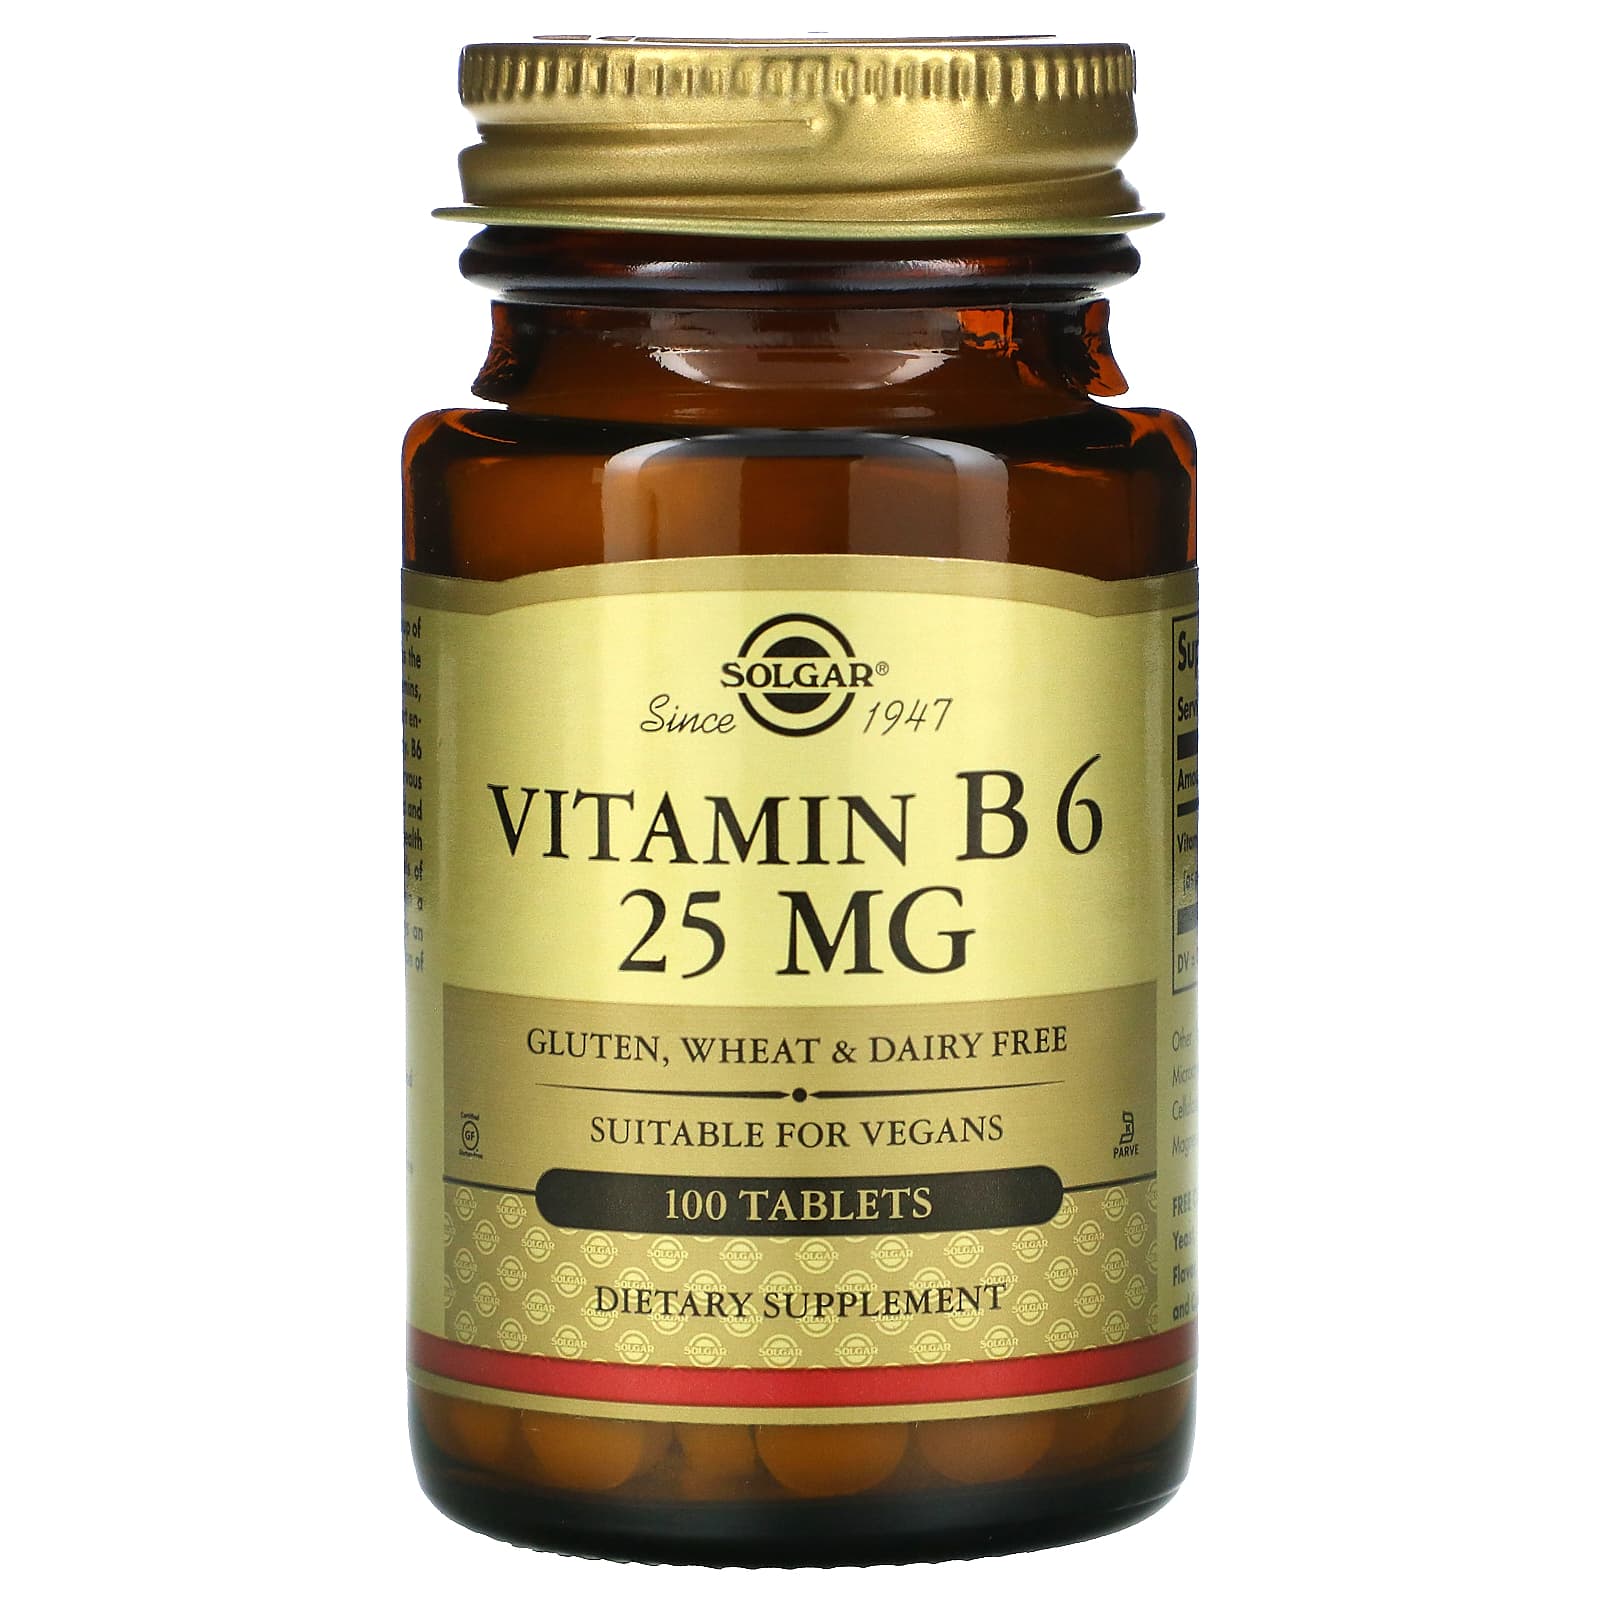 Solgar Vitamin B6 25 Mg, 100 Tablets - Supports Energy Metabolism